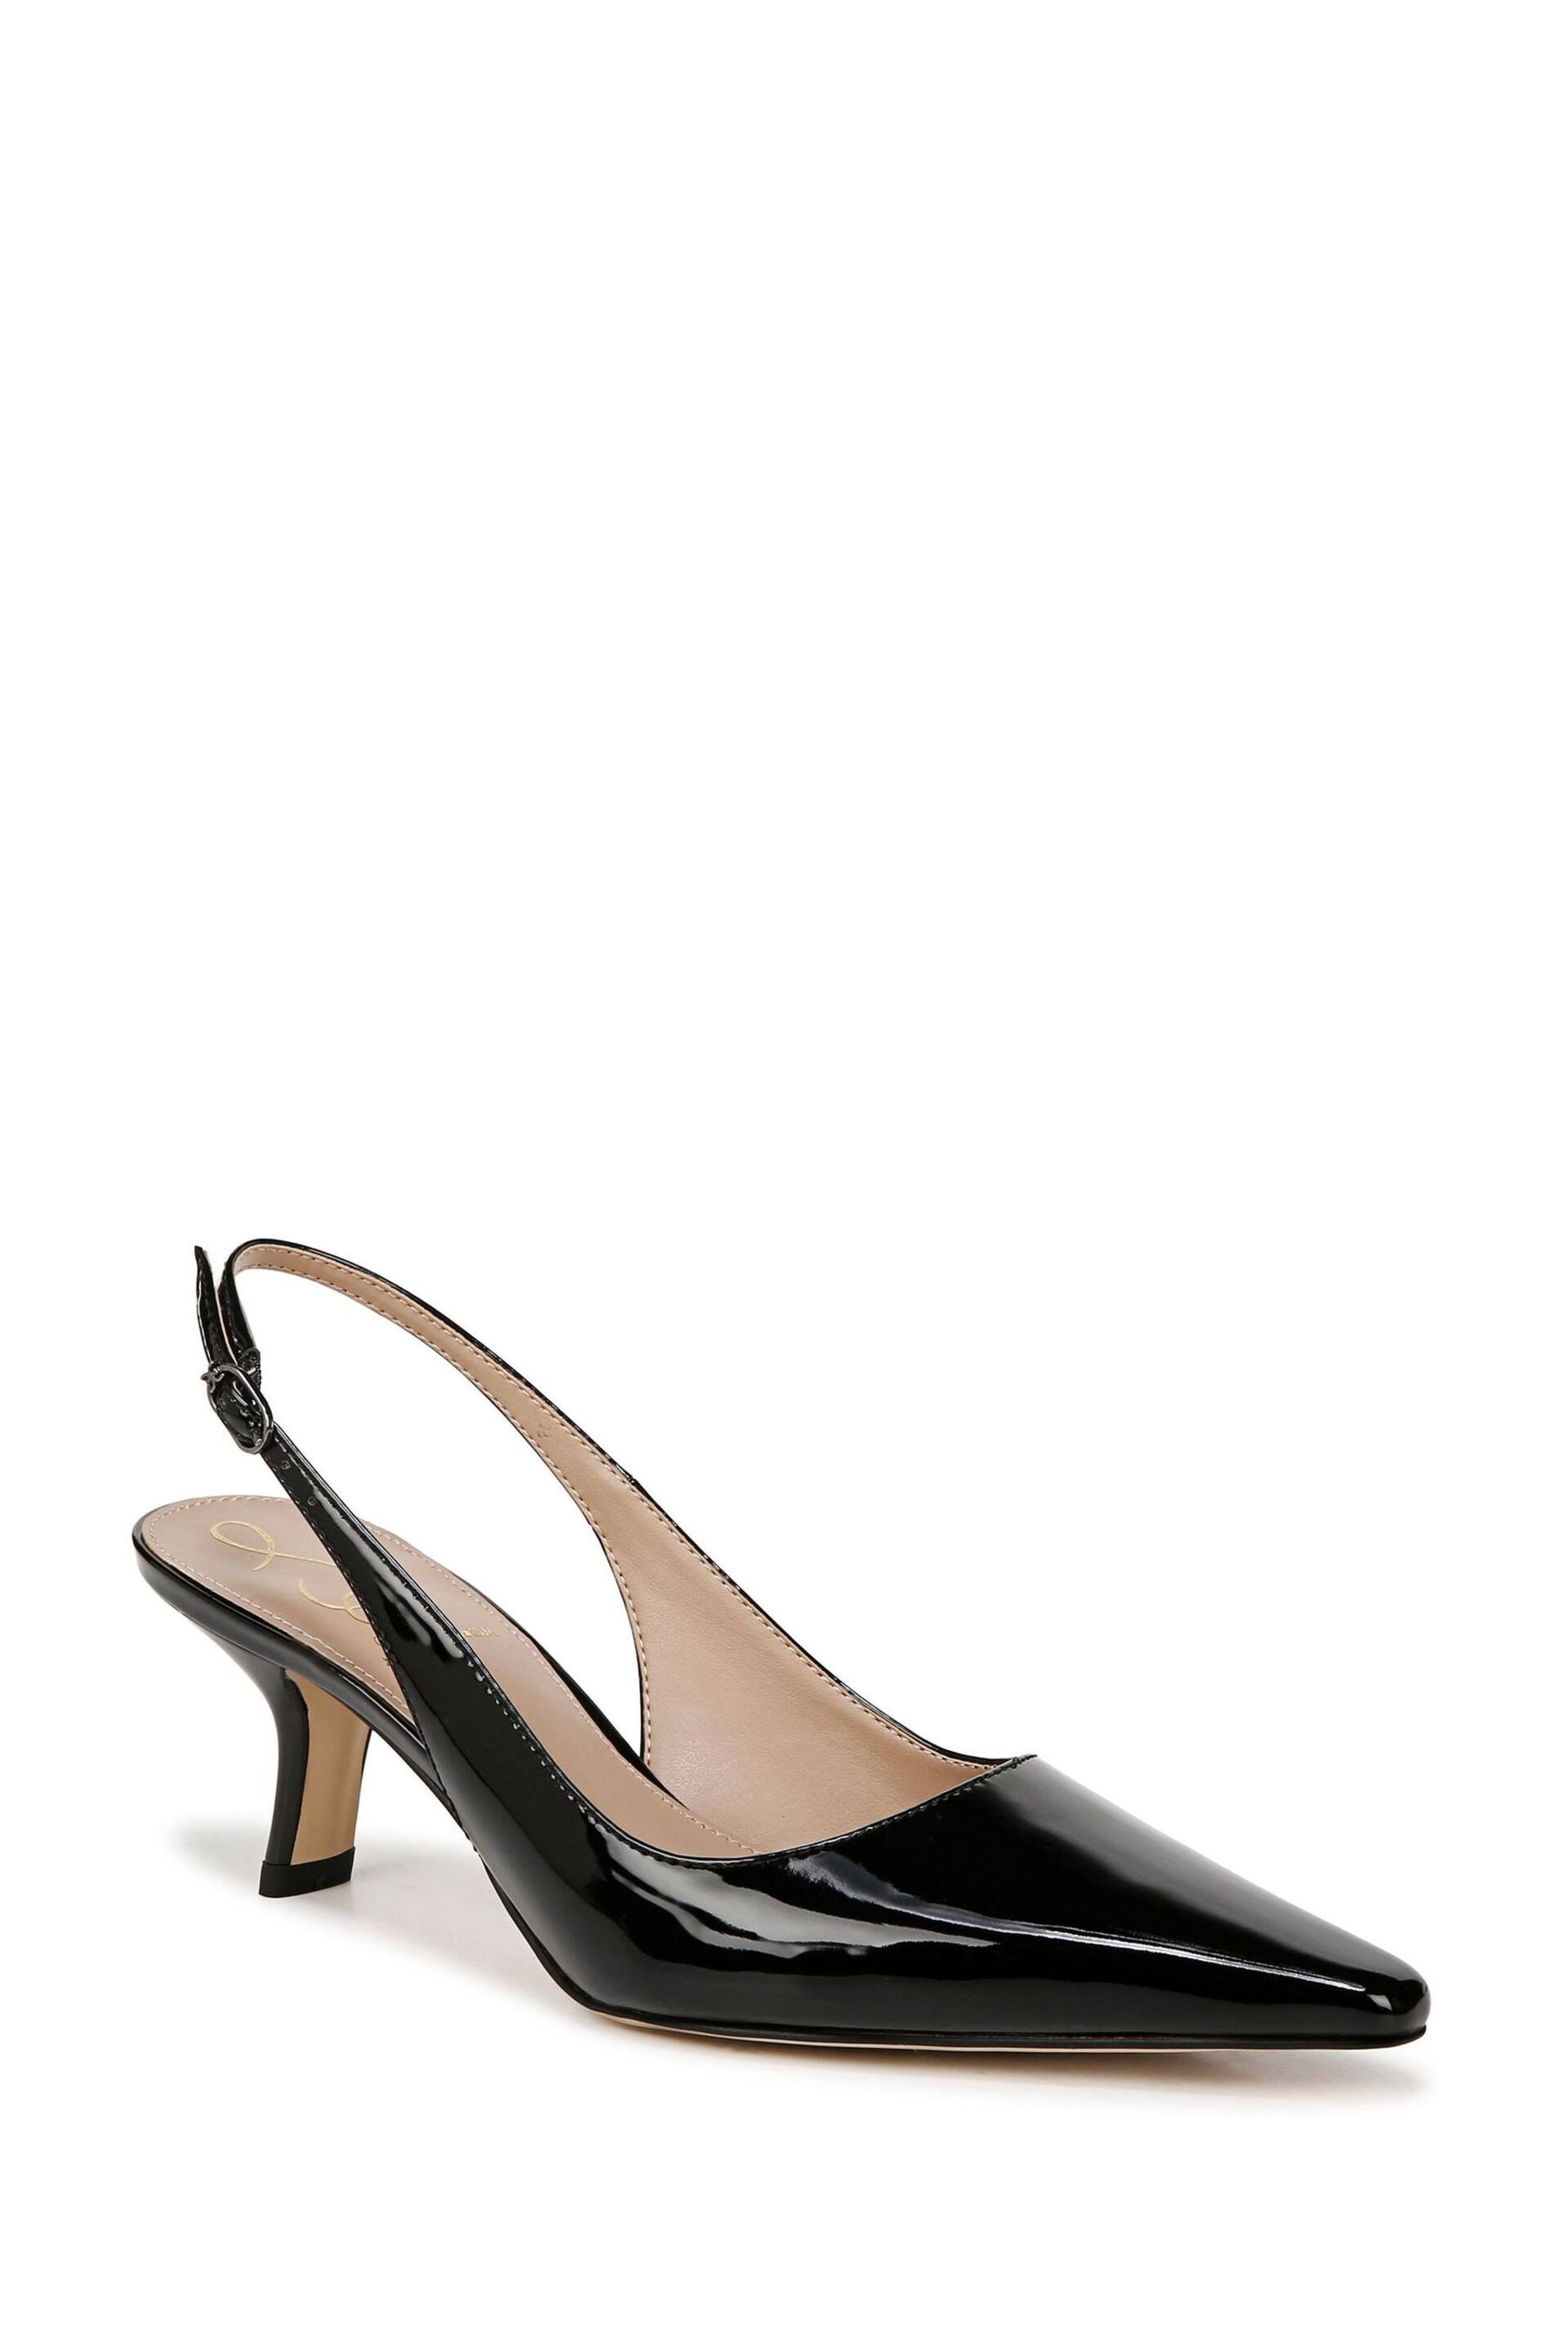 Sam Edelman Bianka Slingback Court Shoes - Image 3 of 7